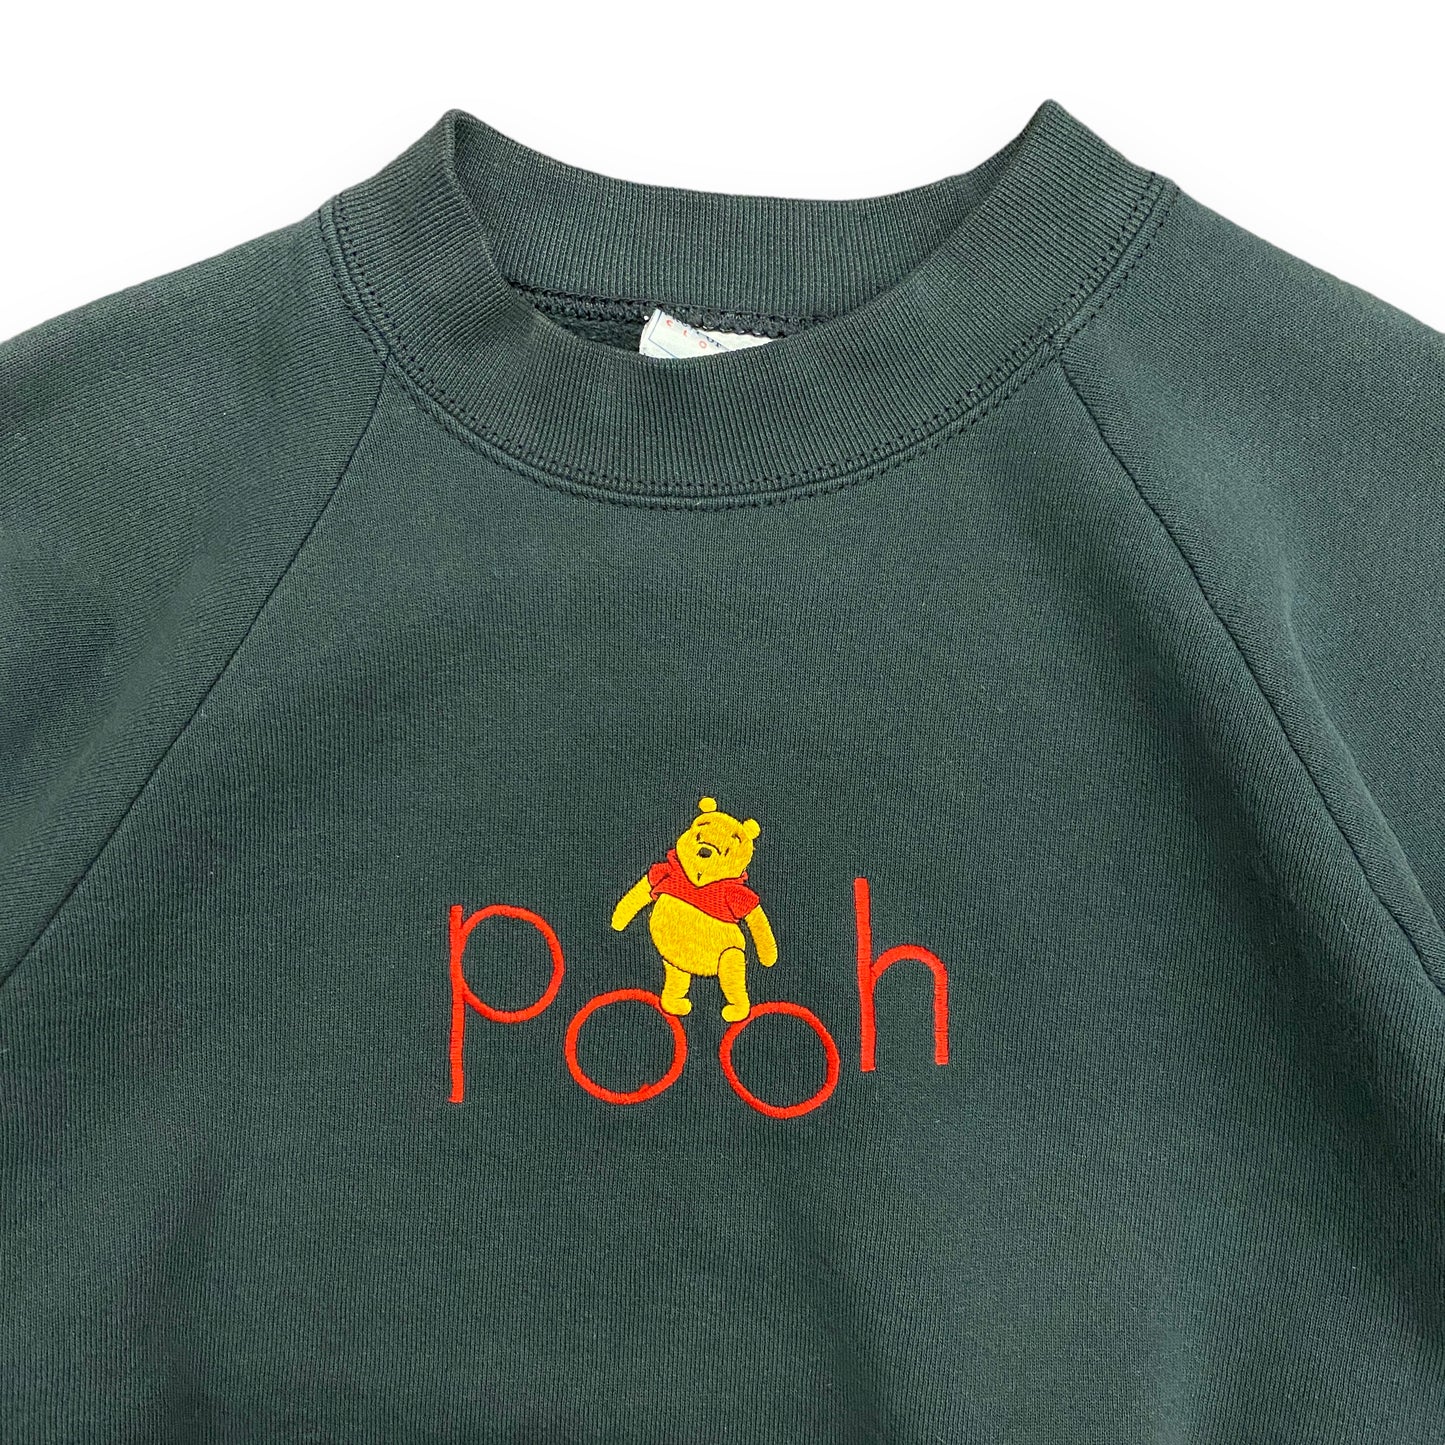 Vintage 1990s Winnie The Pooh Raglan Sweatshirt - Size Large